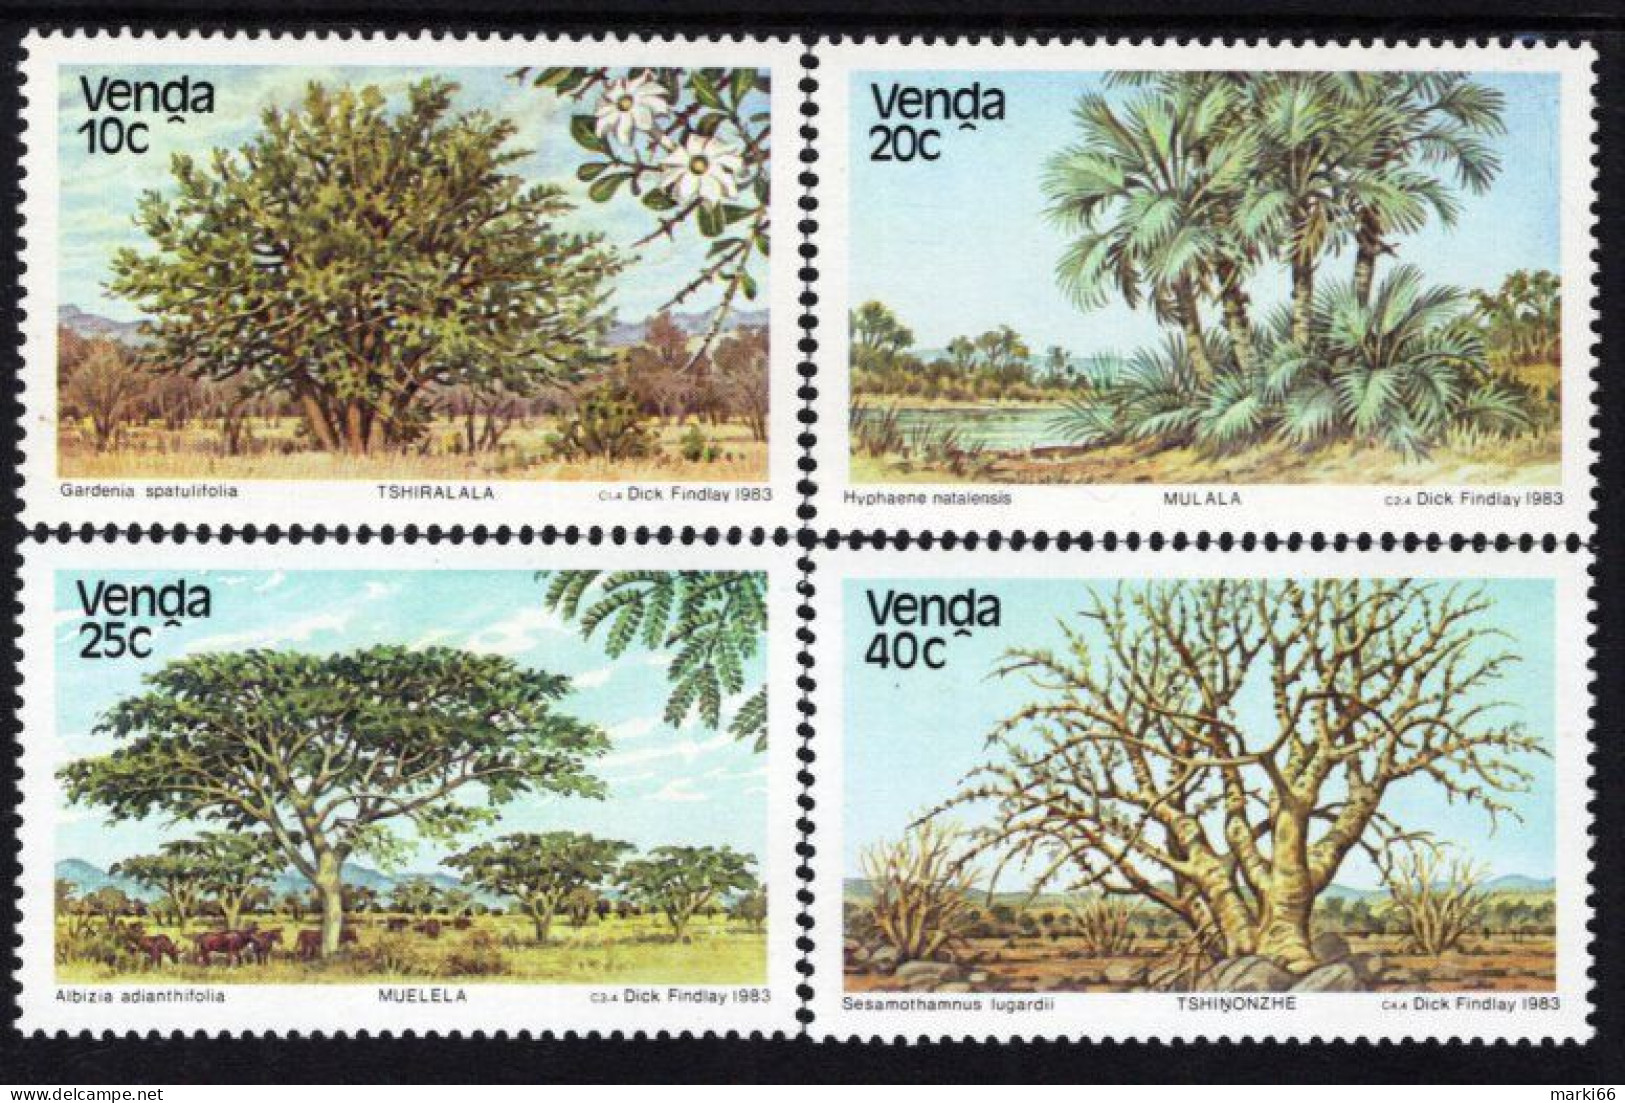 Venda - 1983 - Indigenous Trees - Mint Stamp Set - Venda